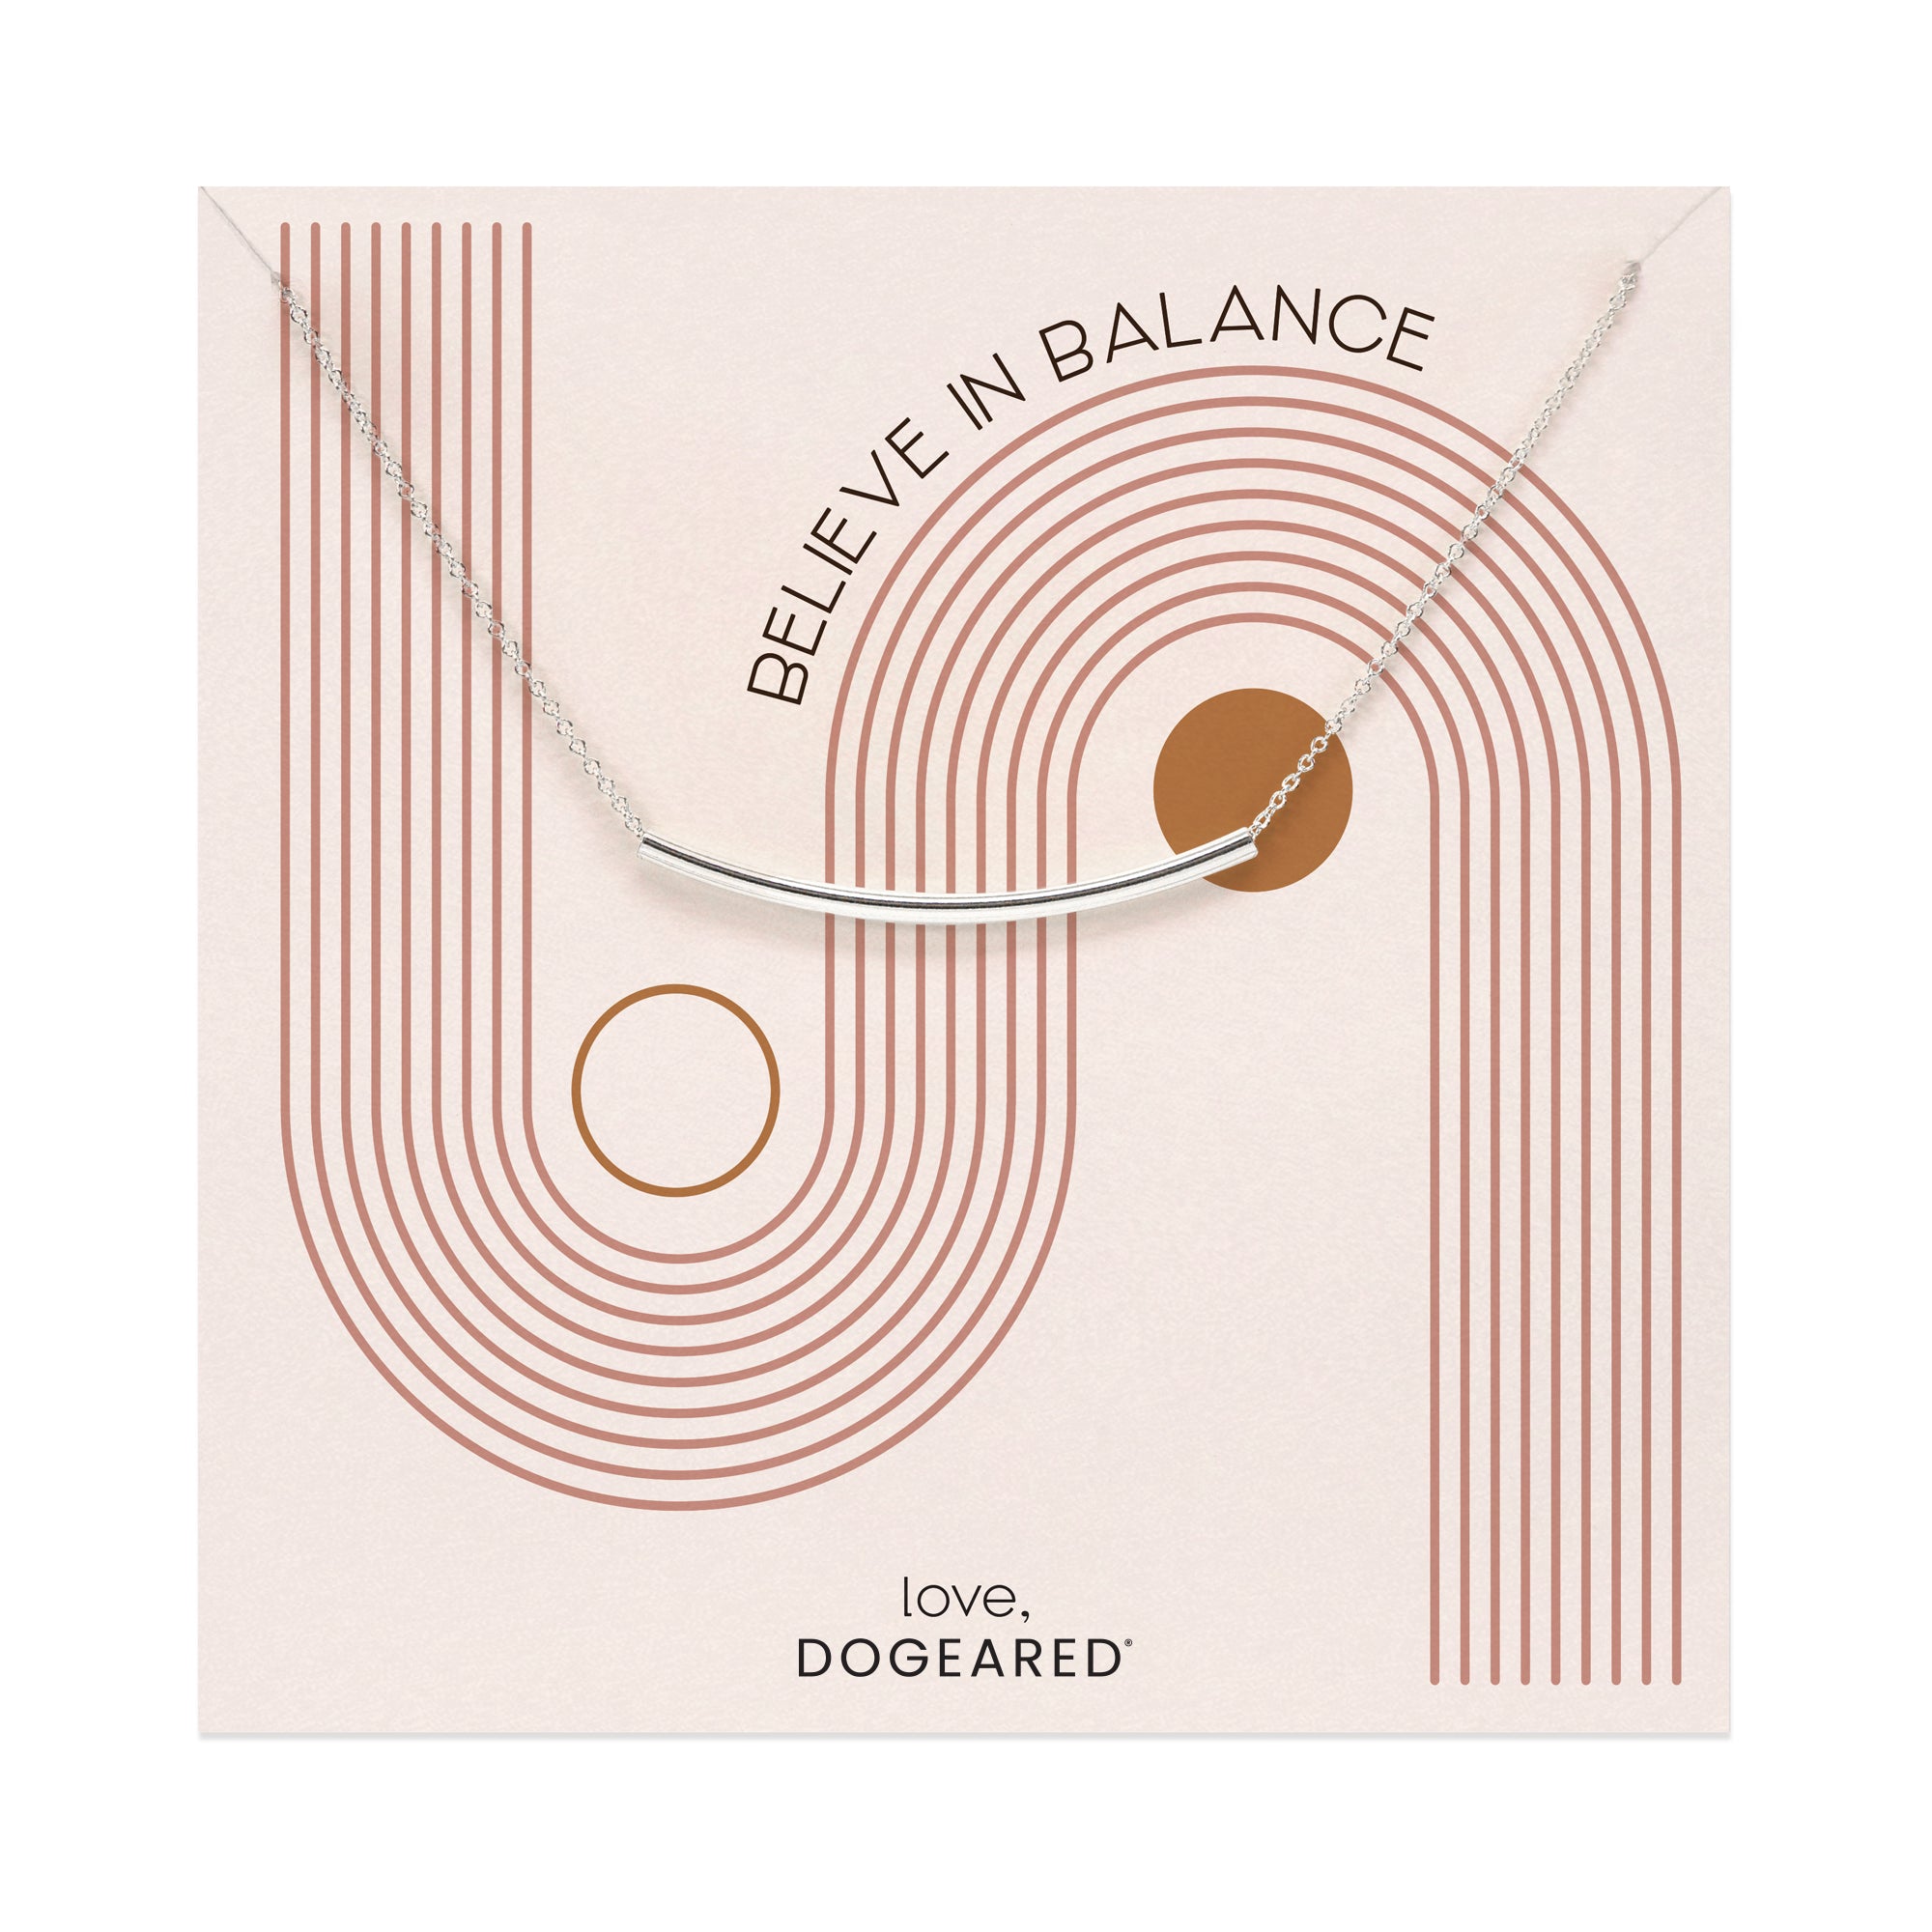 Balance necklace - Dogeared